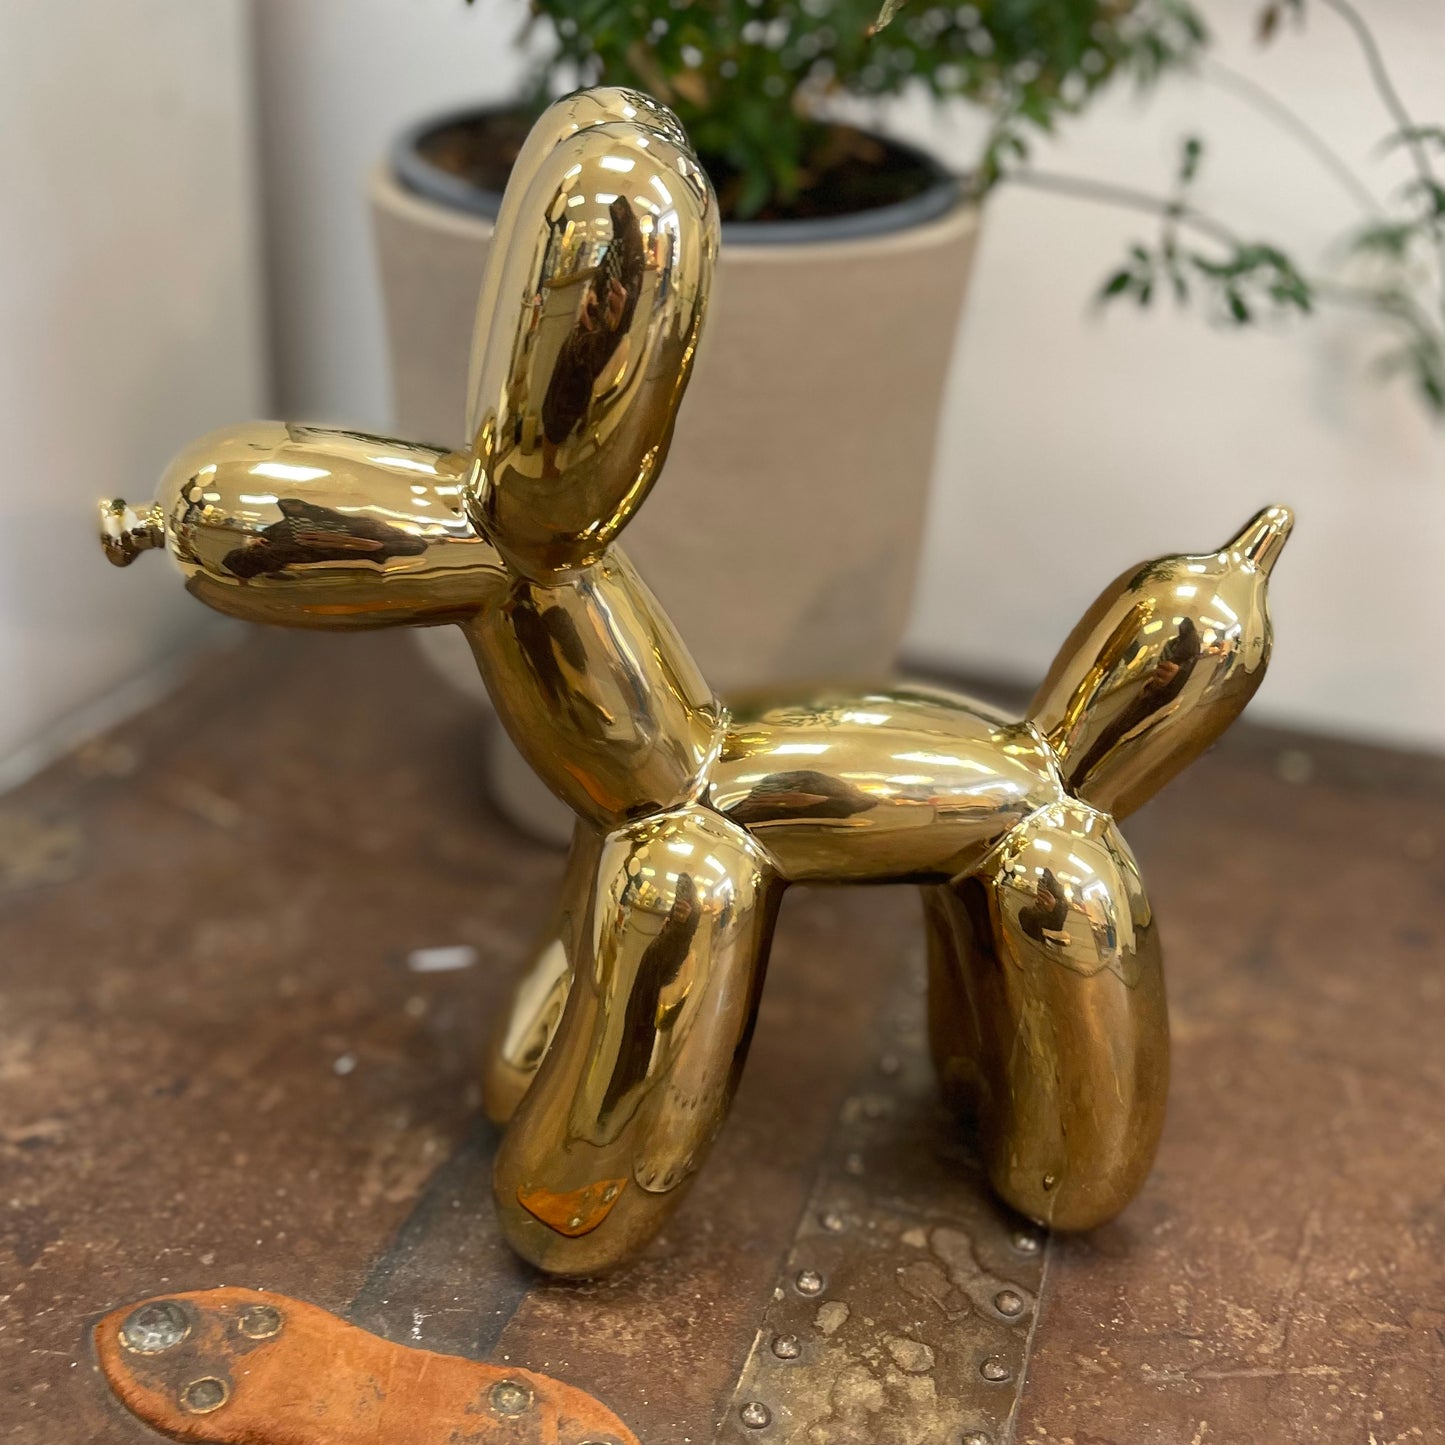 Balloon Dog Sculpture